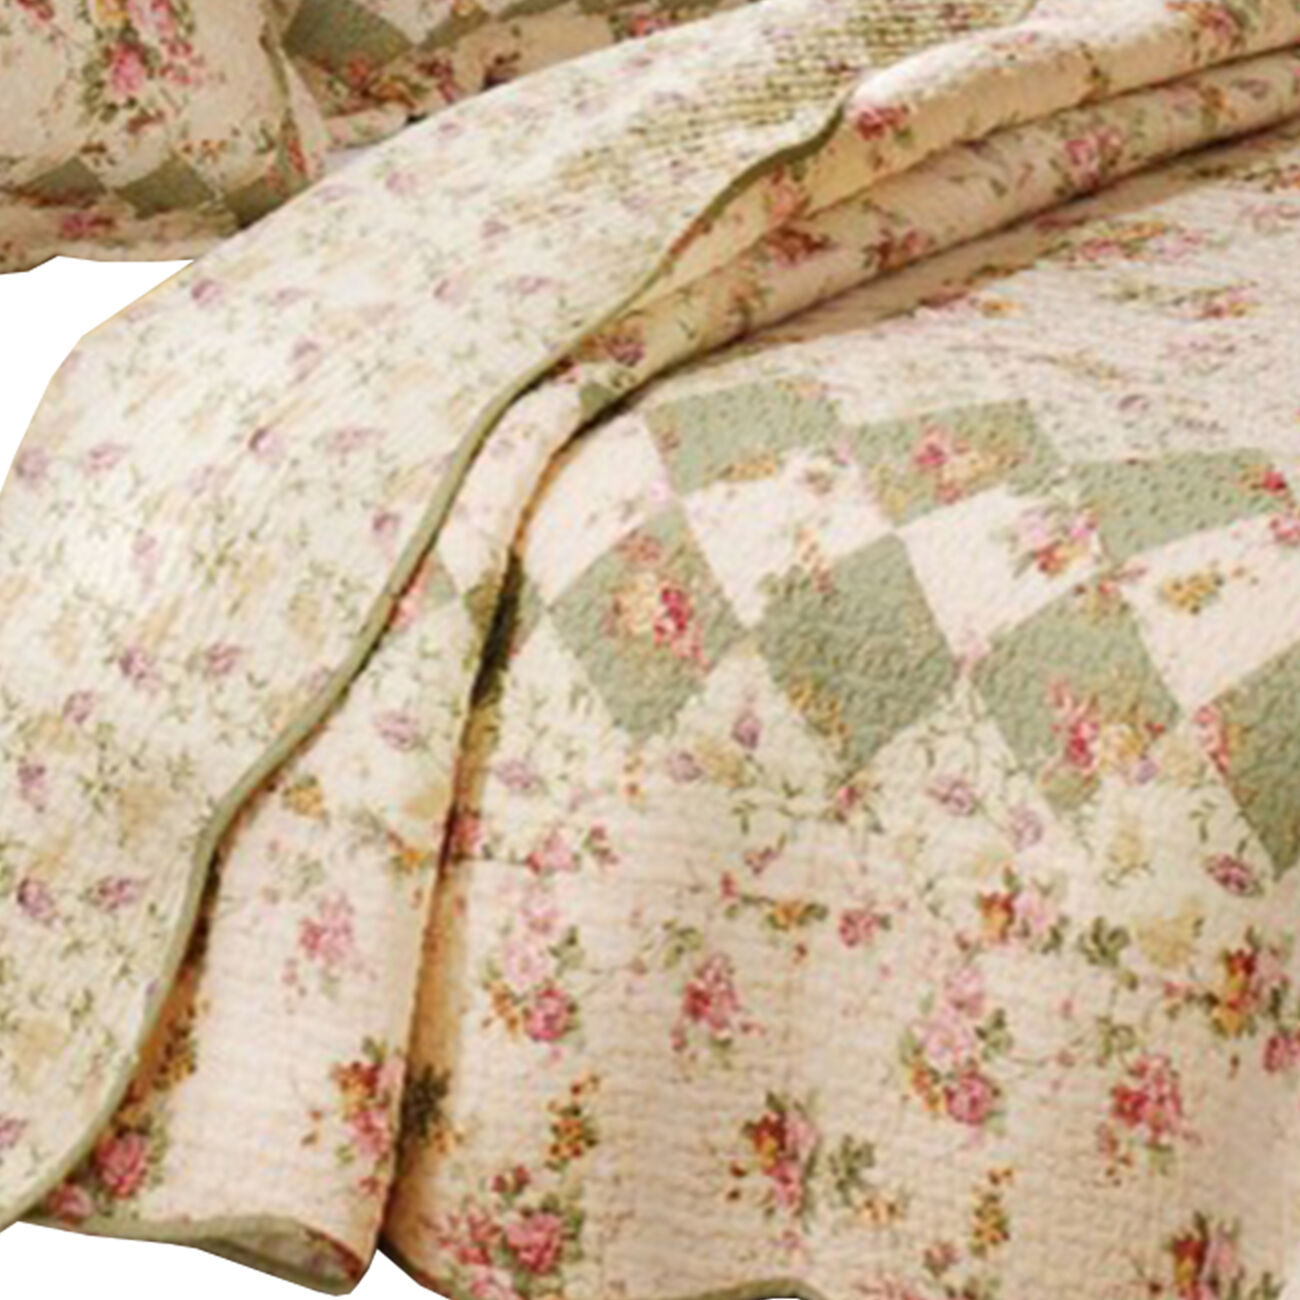 Denali 3 Piece Fabric King Size Quilt Set with Floral Prints, Multicolor